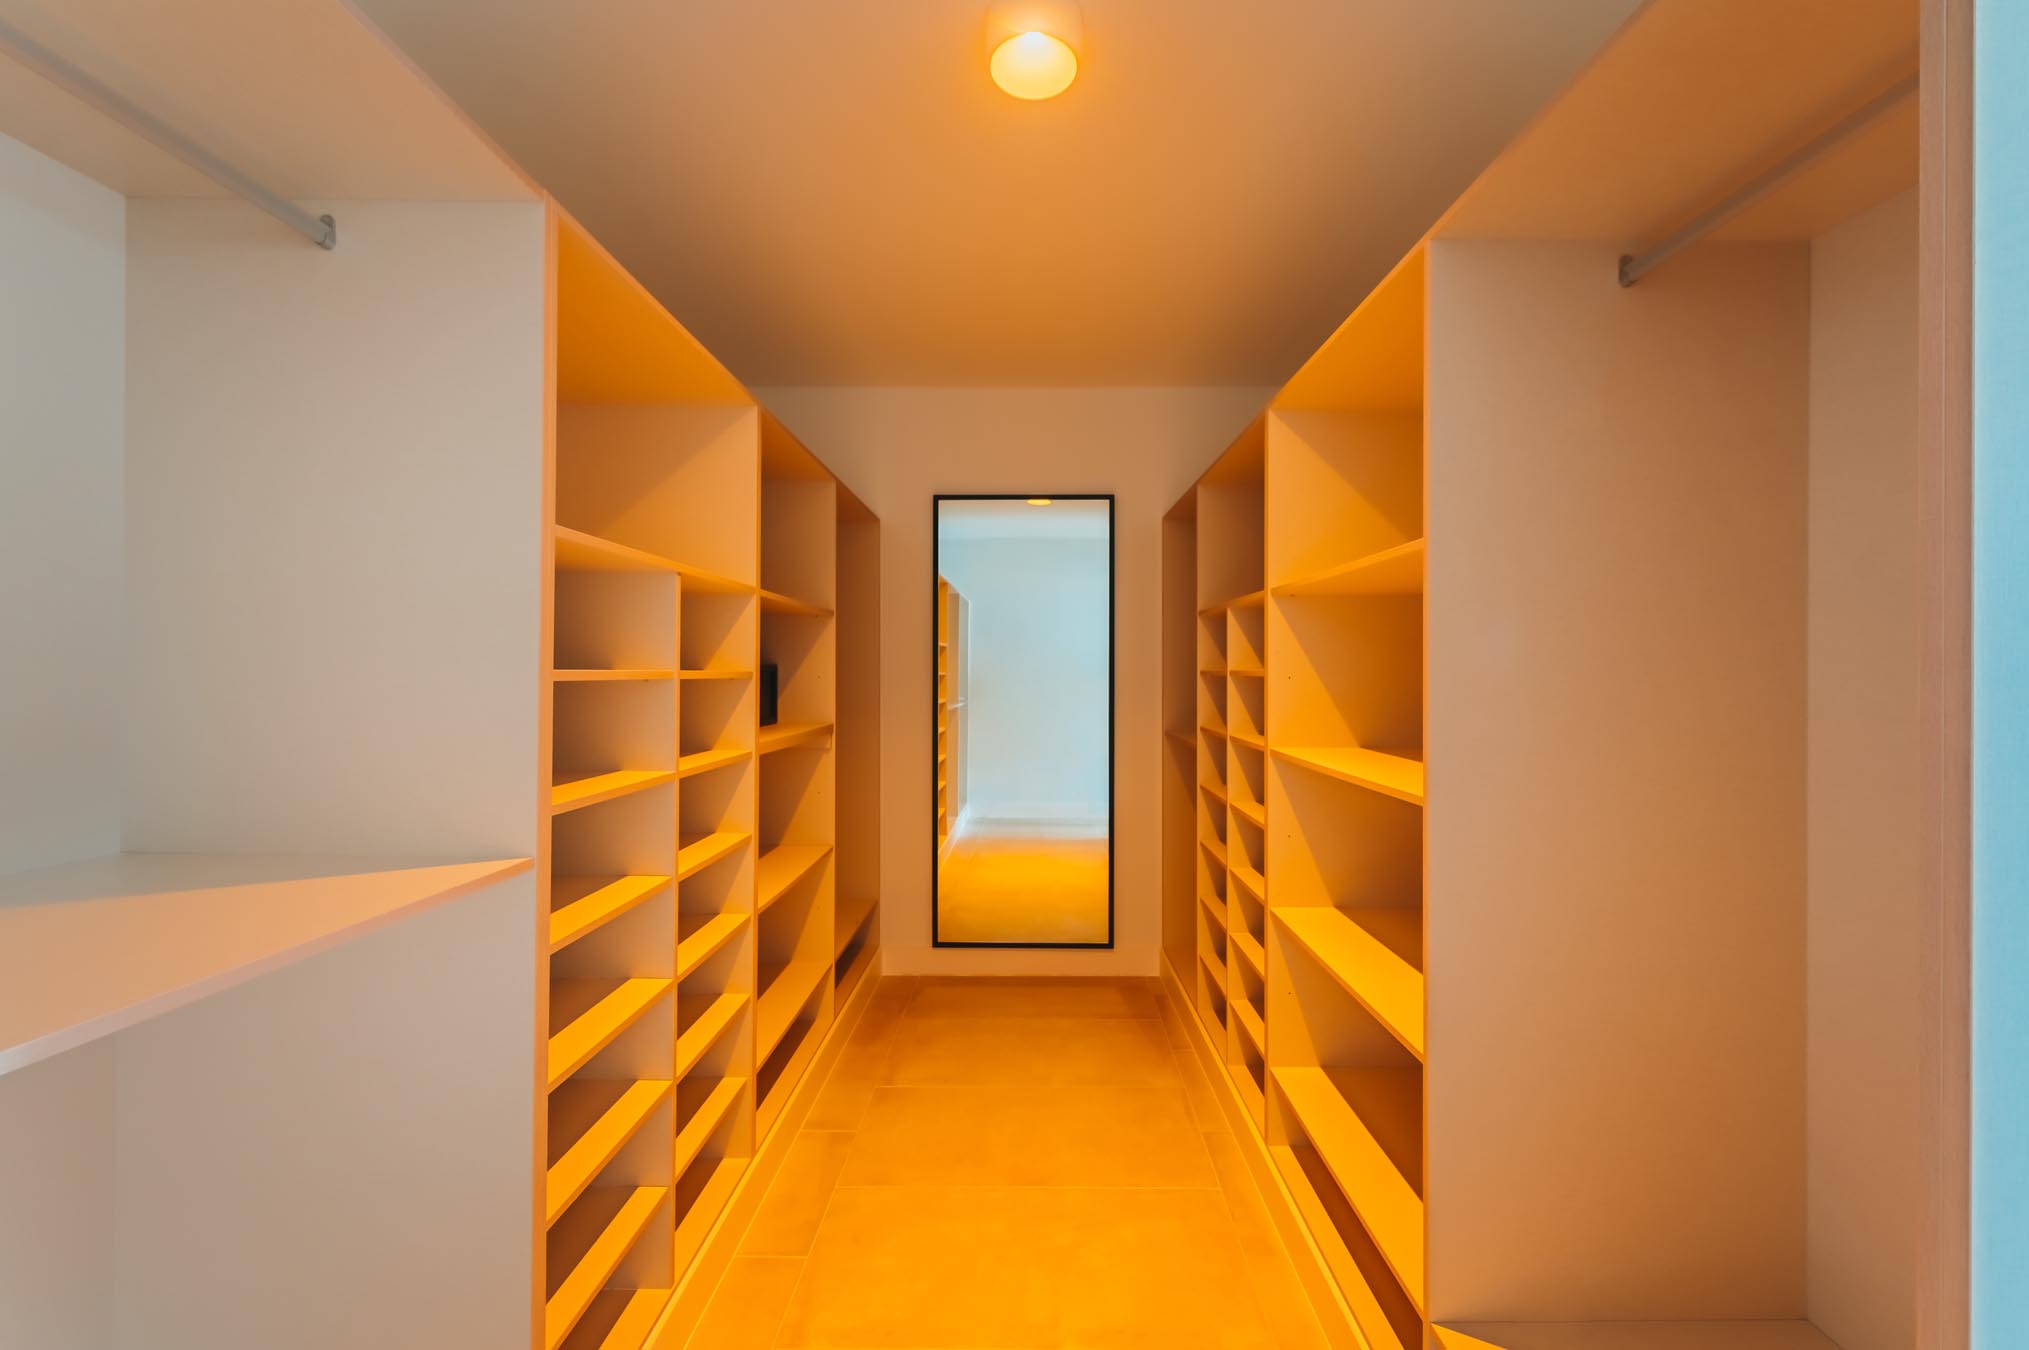 Walk-in closet with overhead lighting